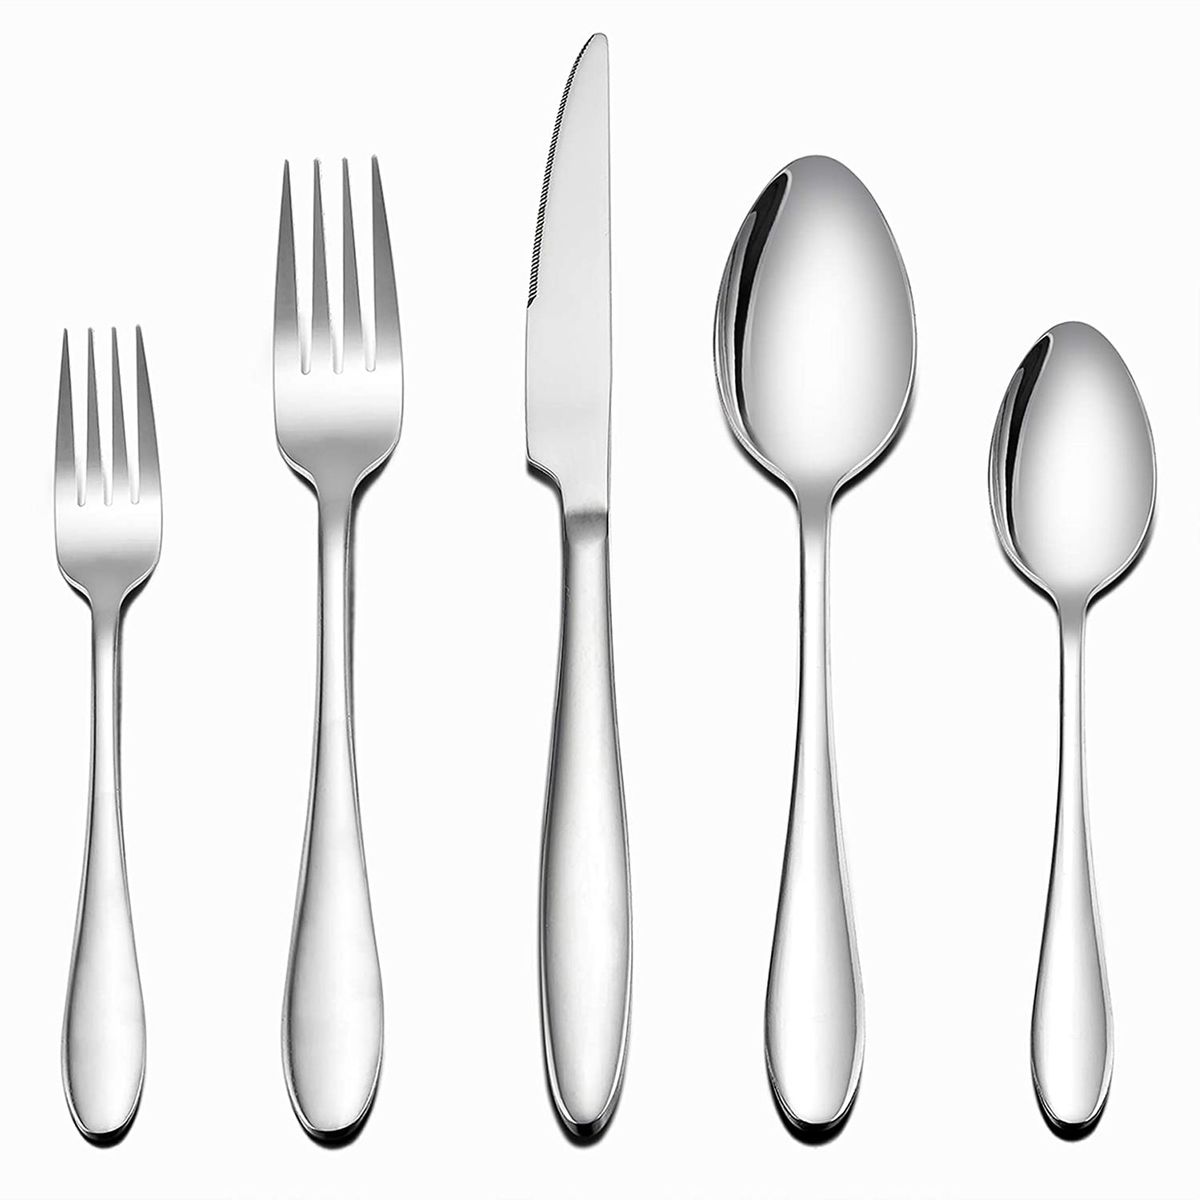 Simple & Classic Design Dinner Knives/Forks/Spoons E-far Stainless Steel Eating Utensils Service for 8 Mirror Polished & Dishwasher Safe 40-Piece Flatware Set Silverware Set